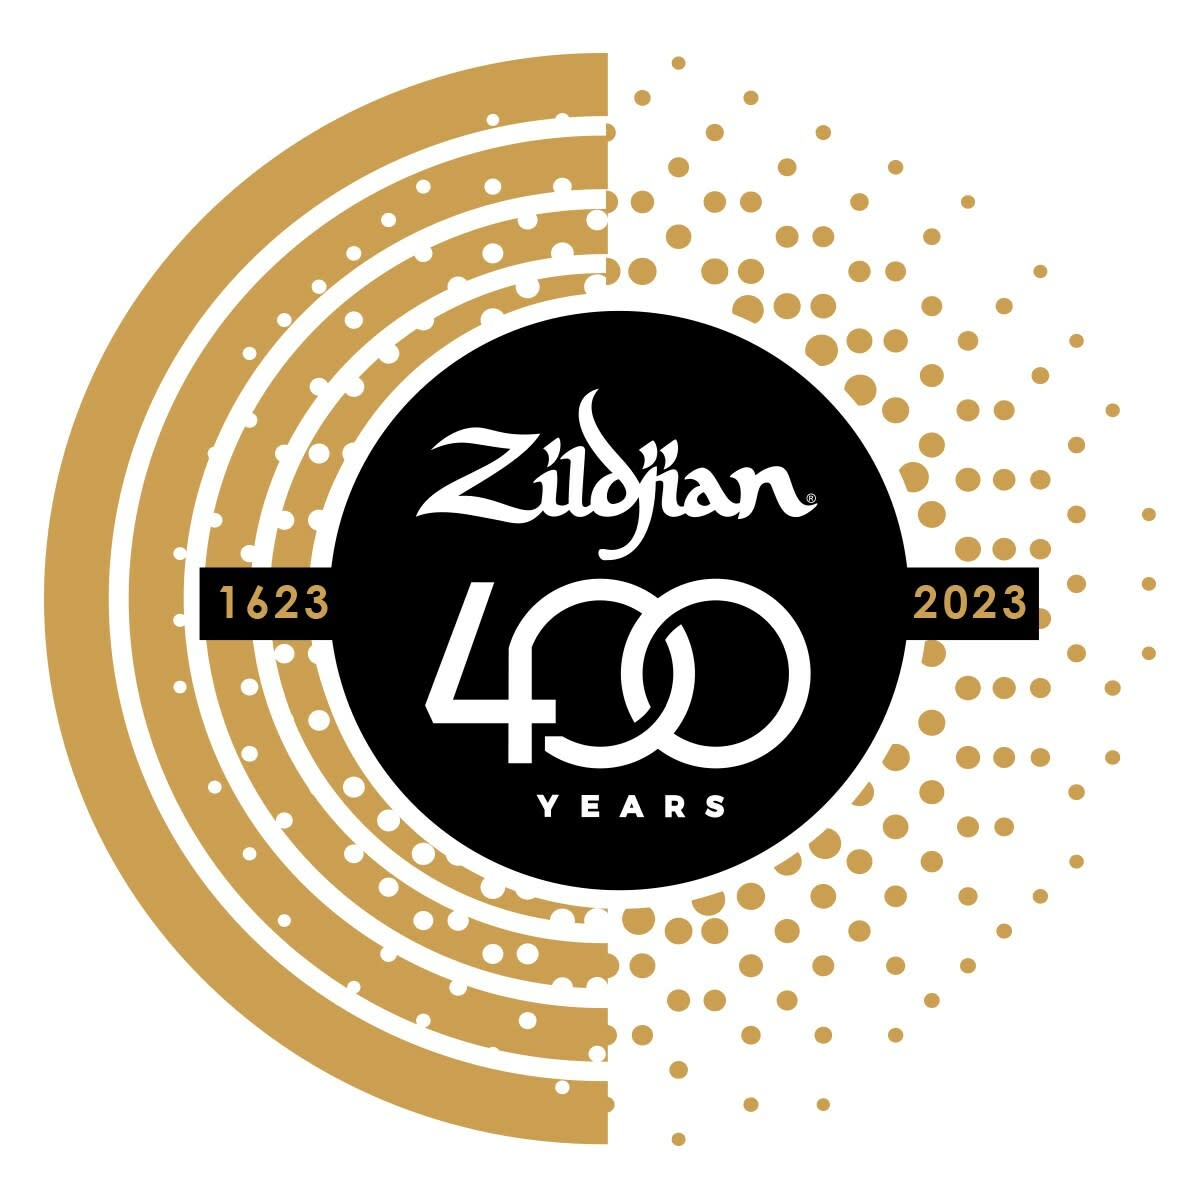  Zildjian 400th anniversary logo 